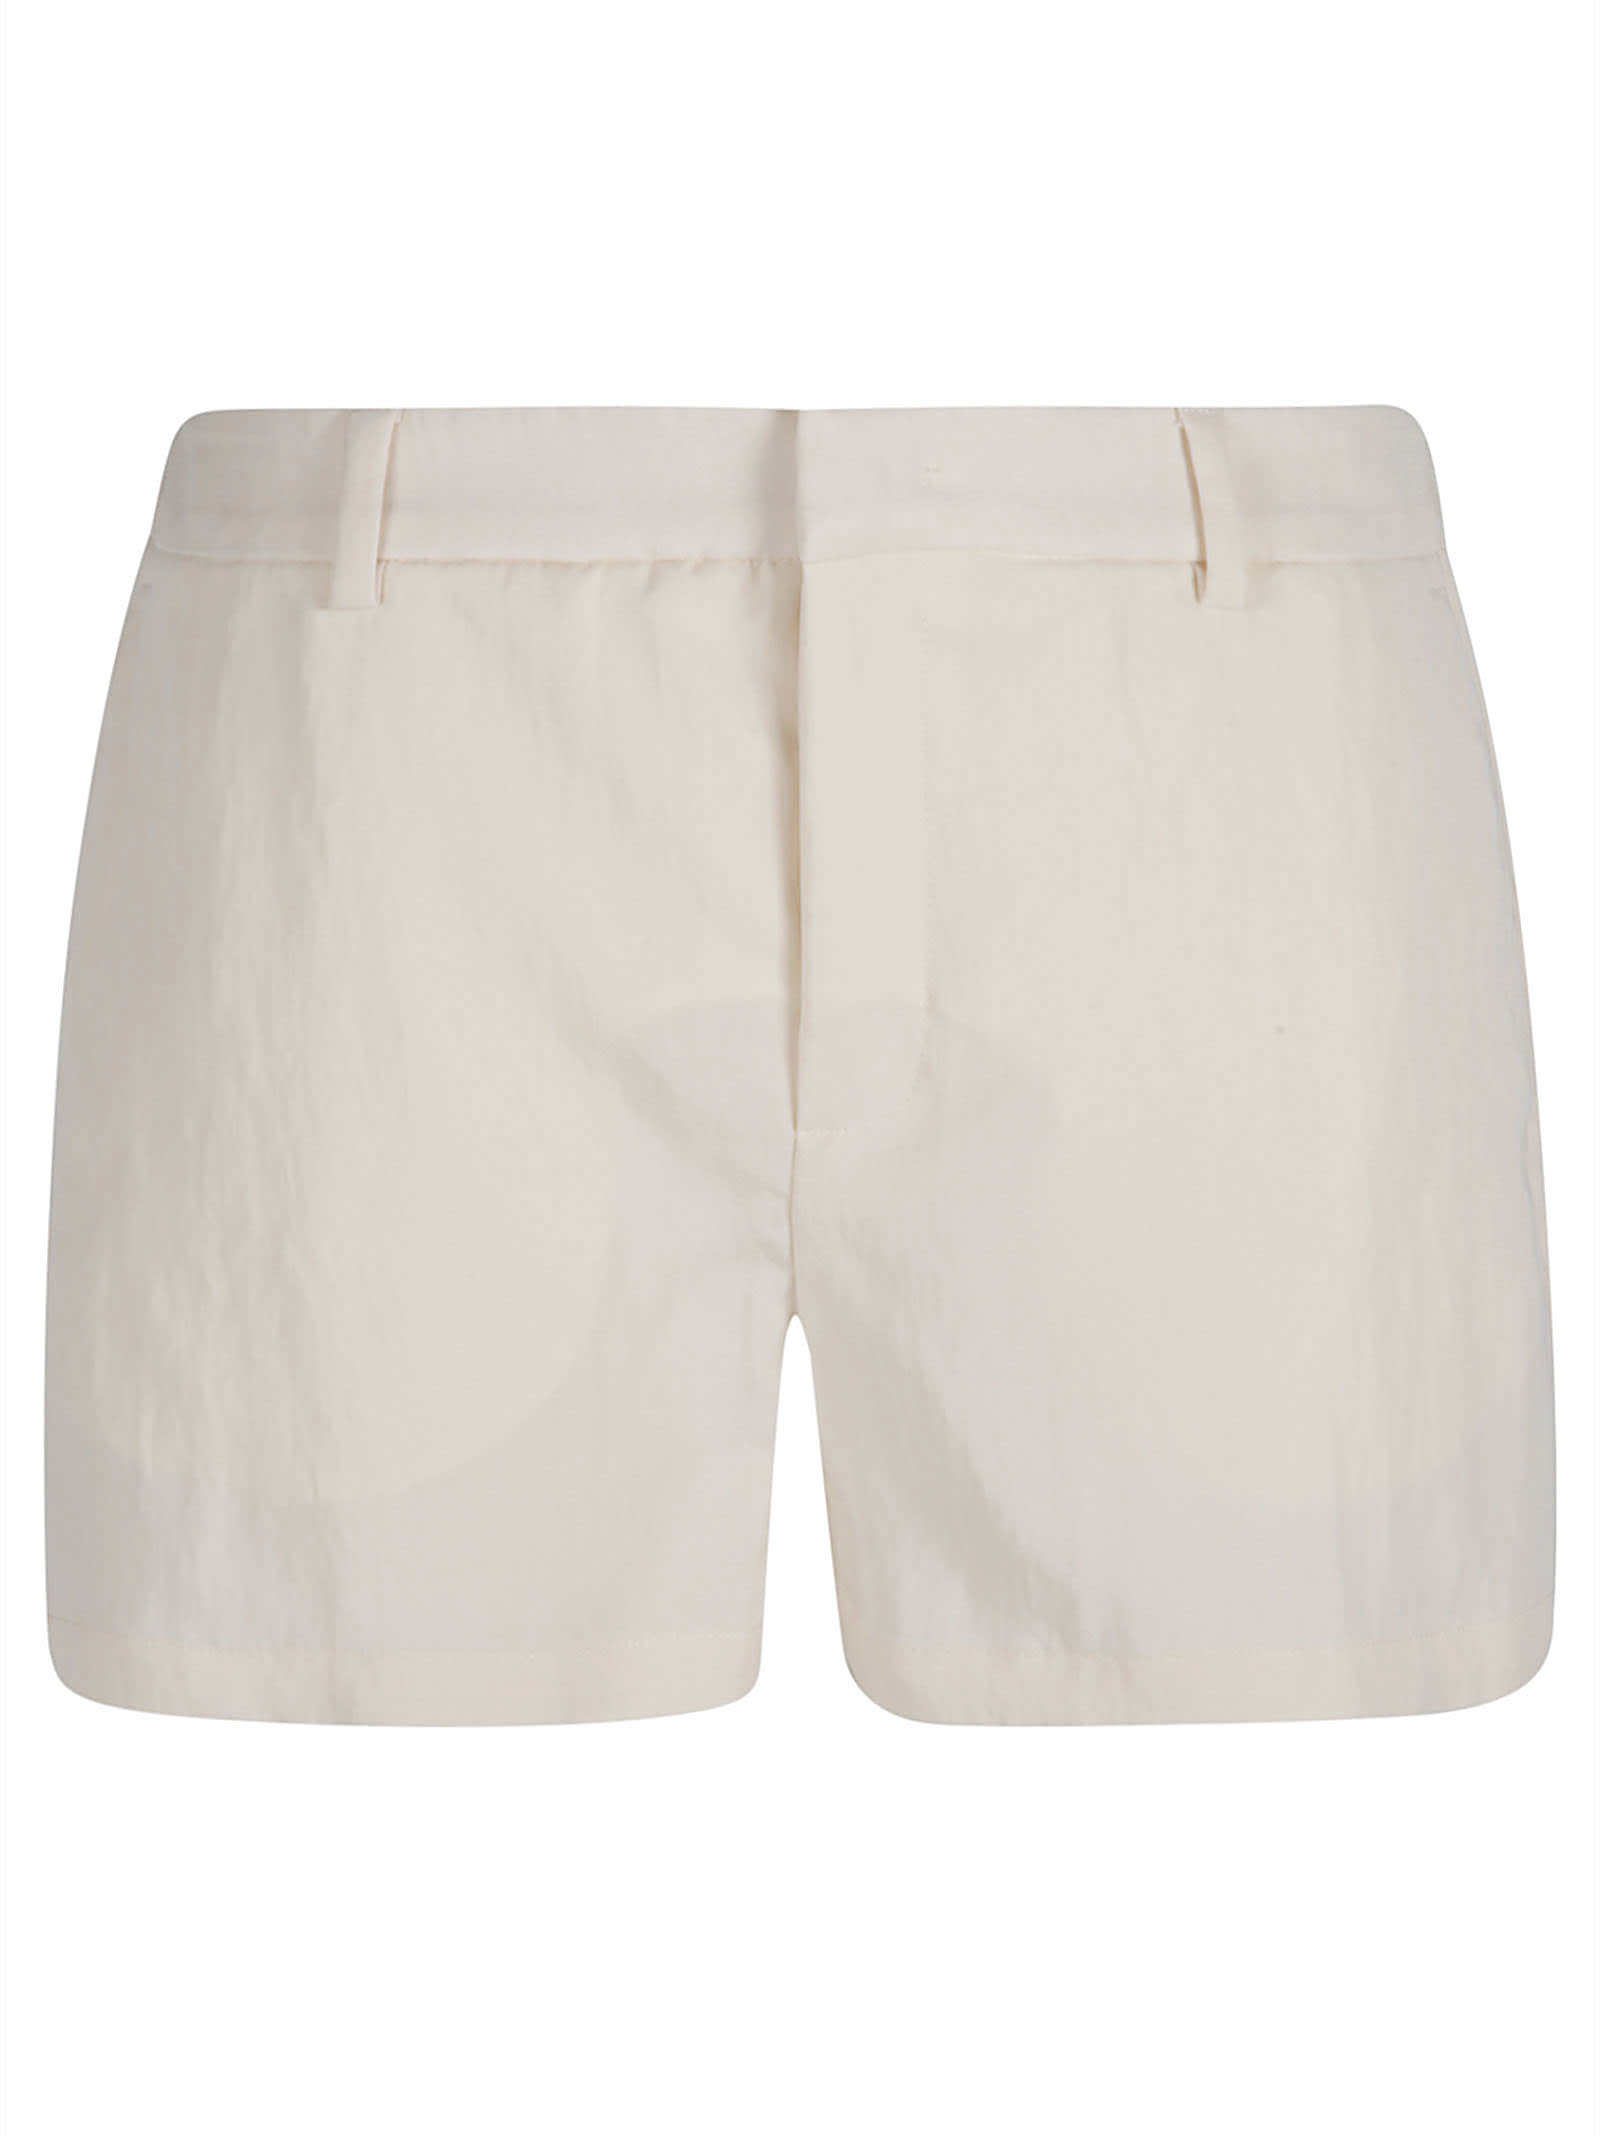 Blumarine Concealed Shorts In Cream